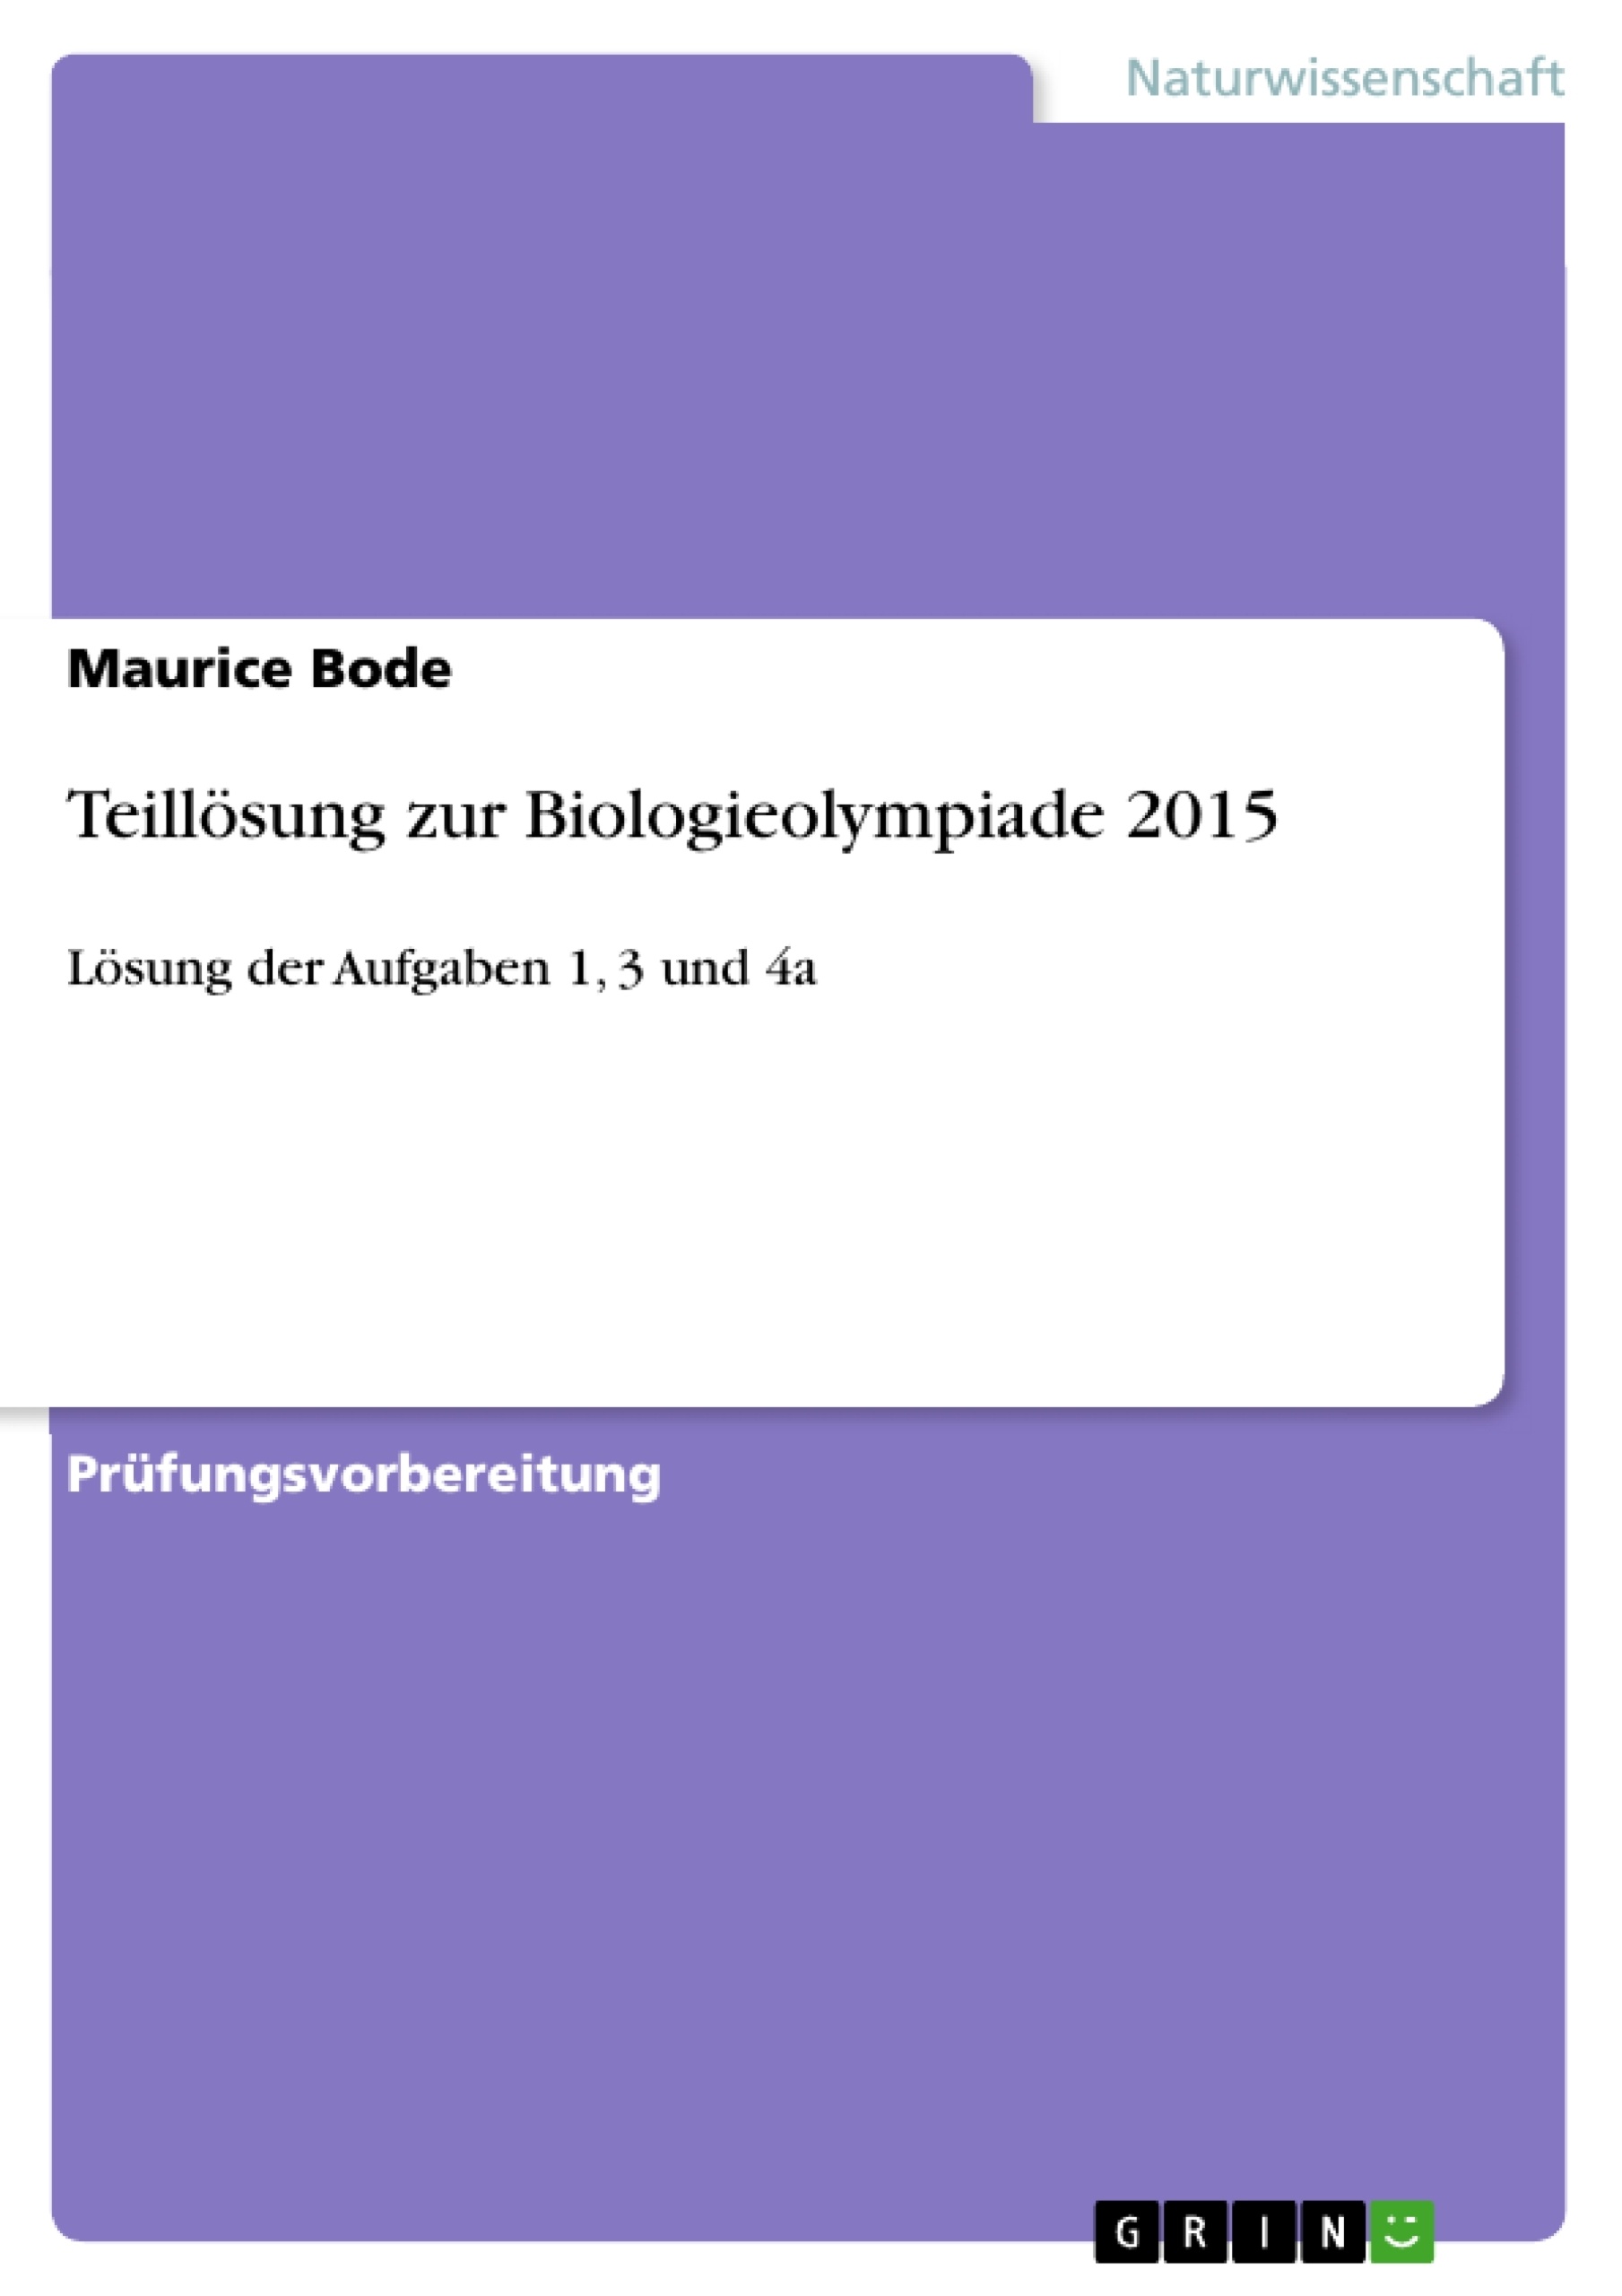 Titre: Teillösung zur Biologieolympiade 2015